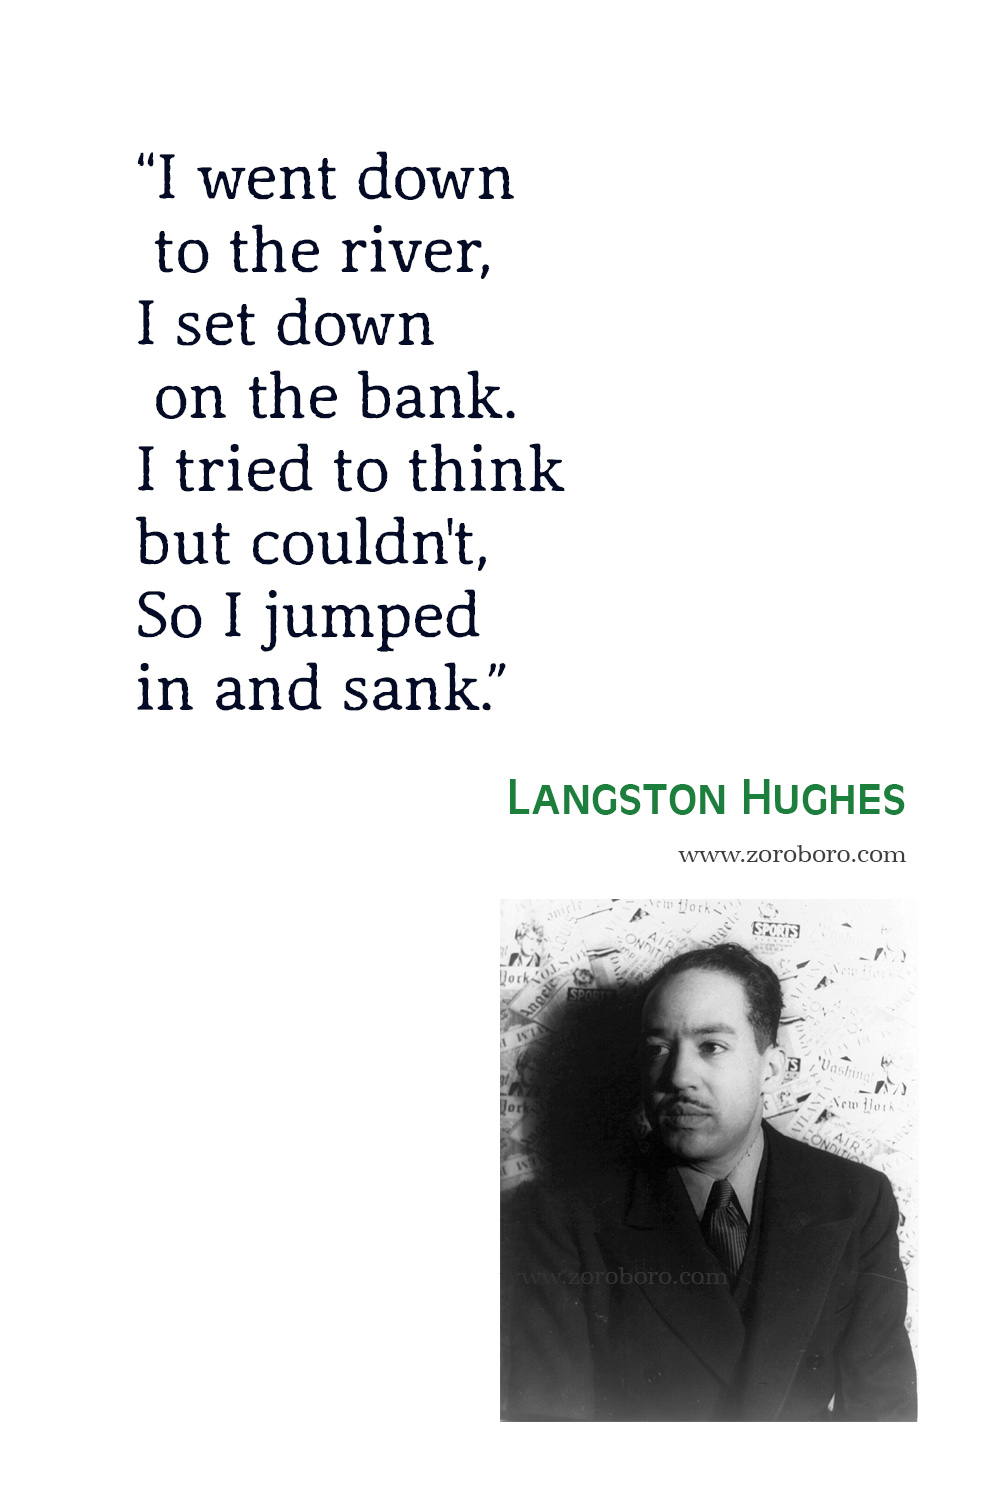 Langston Hughes Quotes, Langston Hughes Poems, Langston Hughes Poetry, Langston Hughes Dreams, Mother, Famous Langston Hughes Poems.